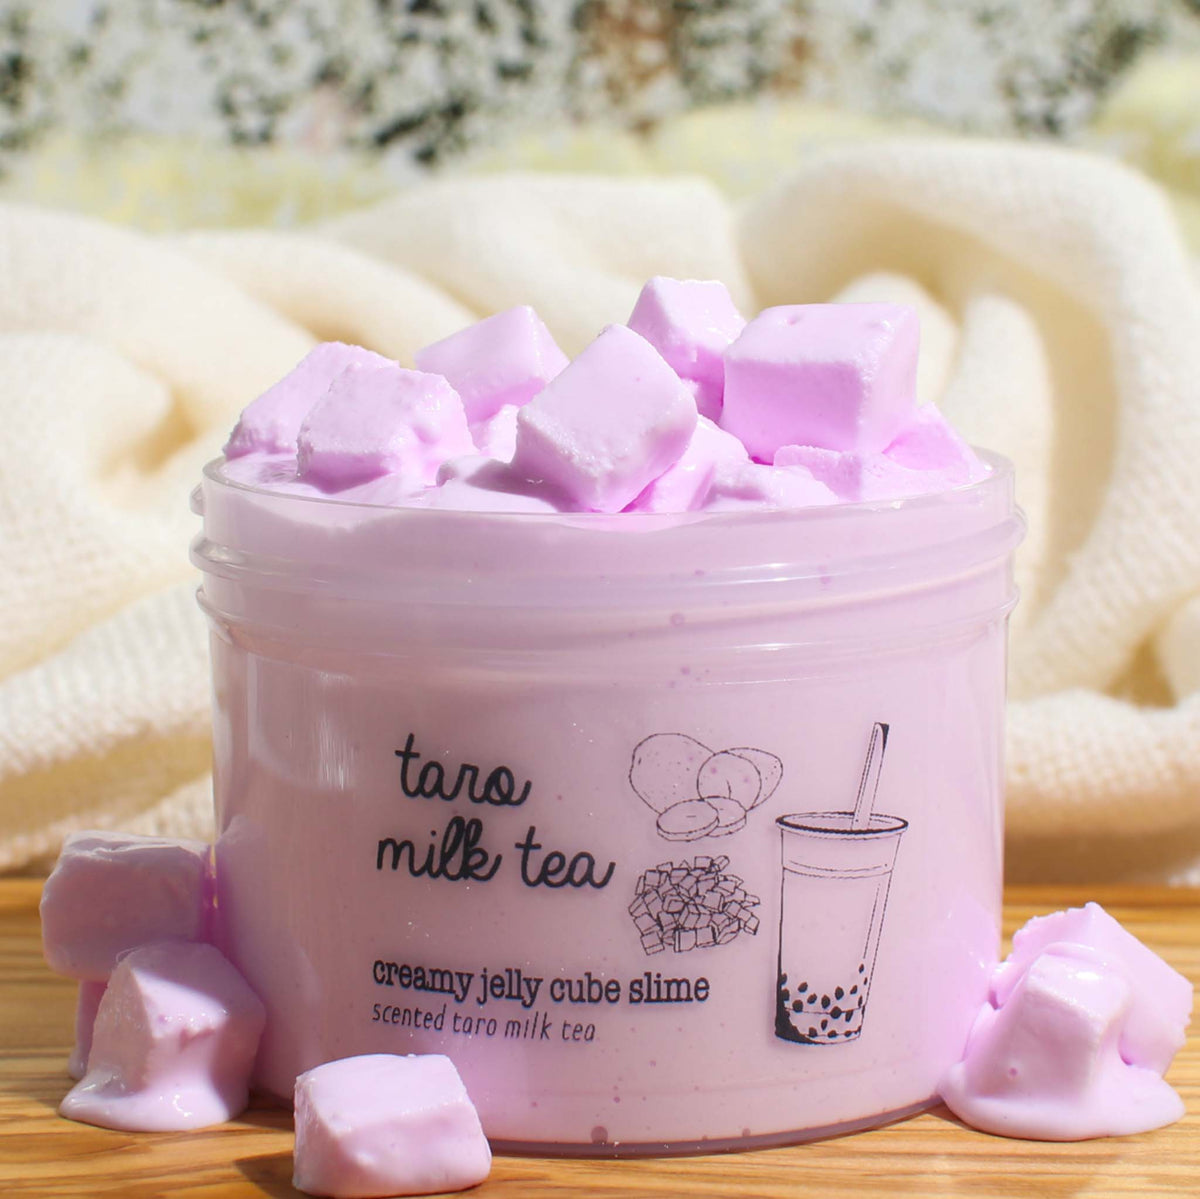 Taro Milk Tea Creamy Jelly Cube Purple Slime Fantasies 9oz Front View